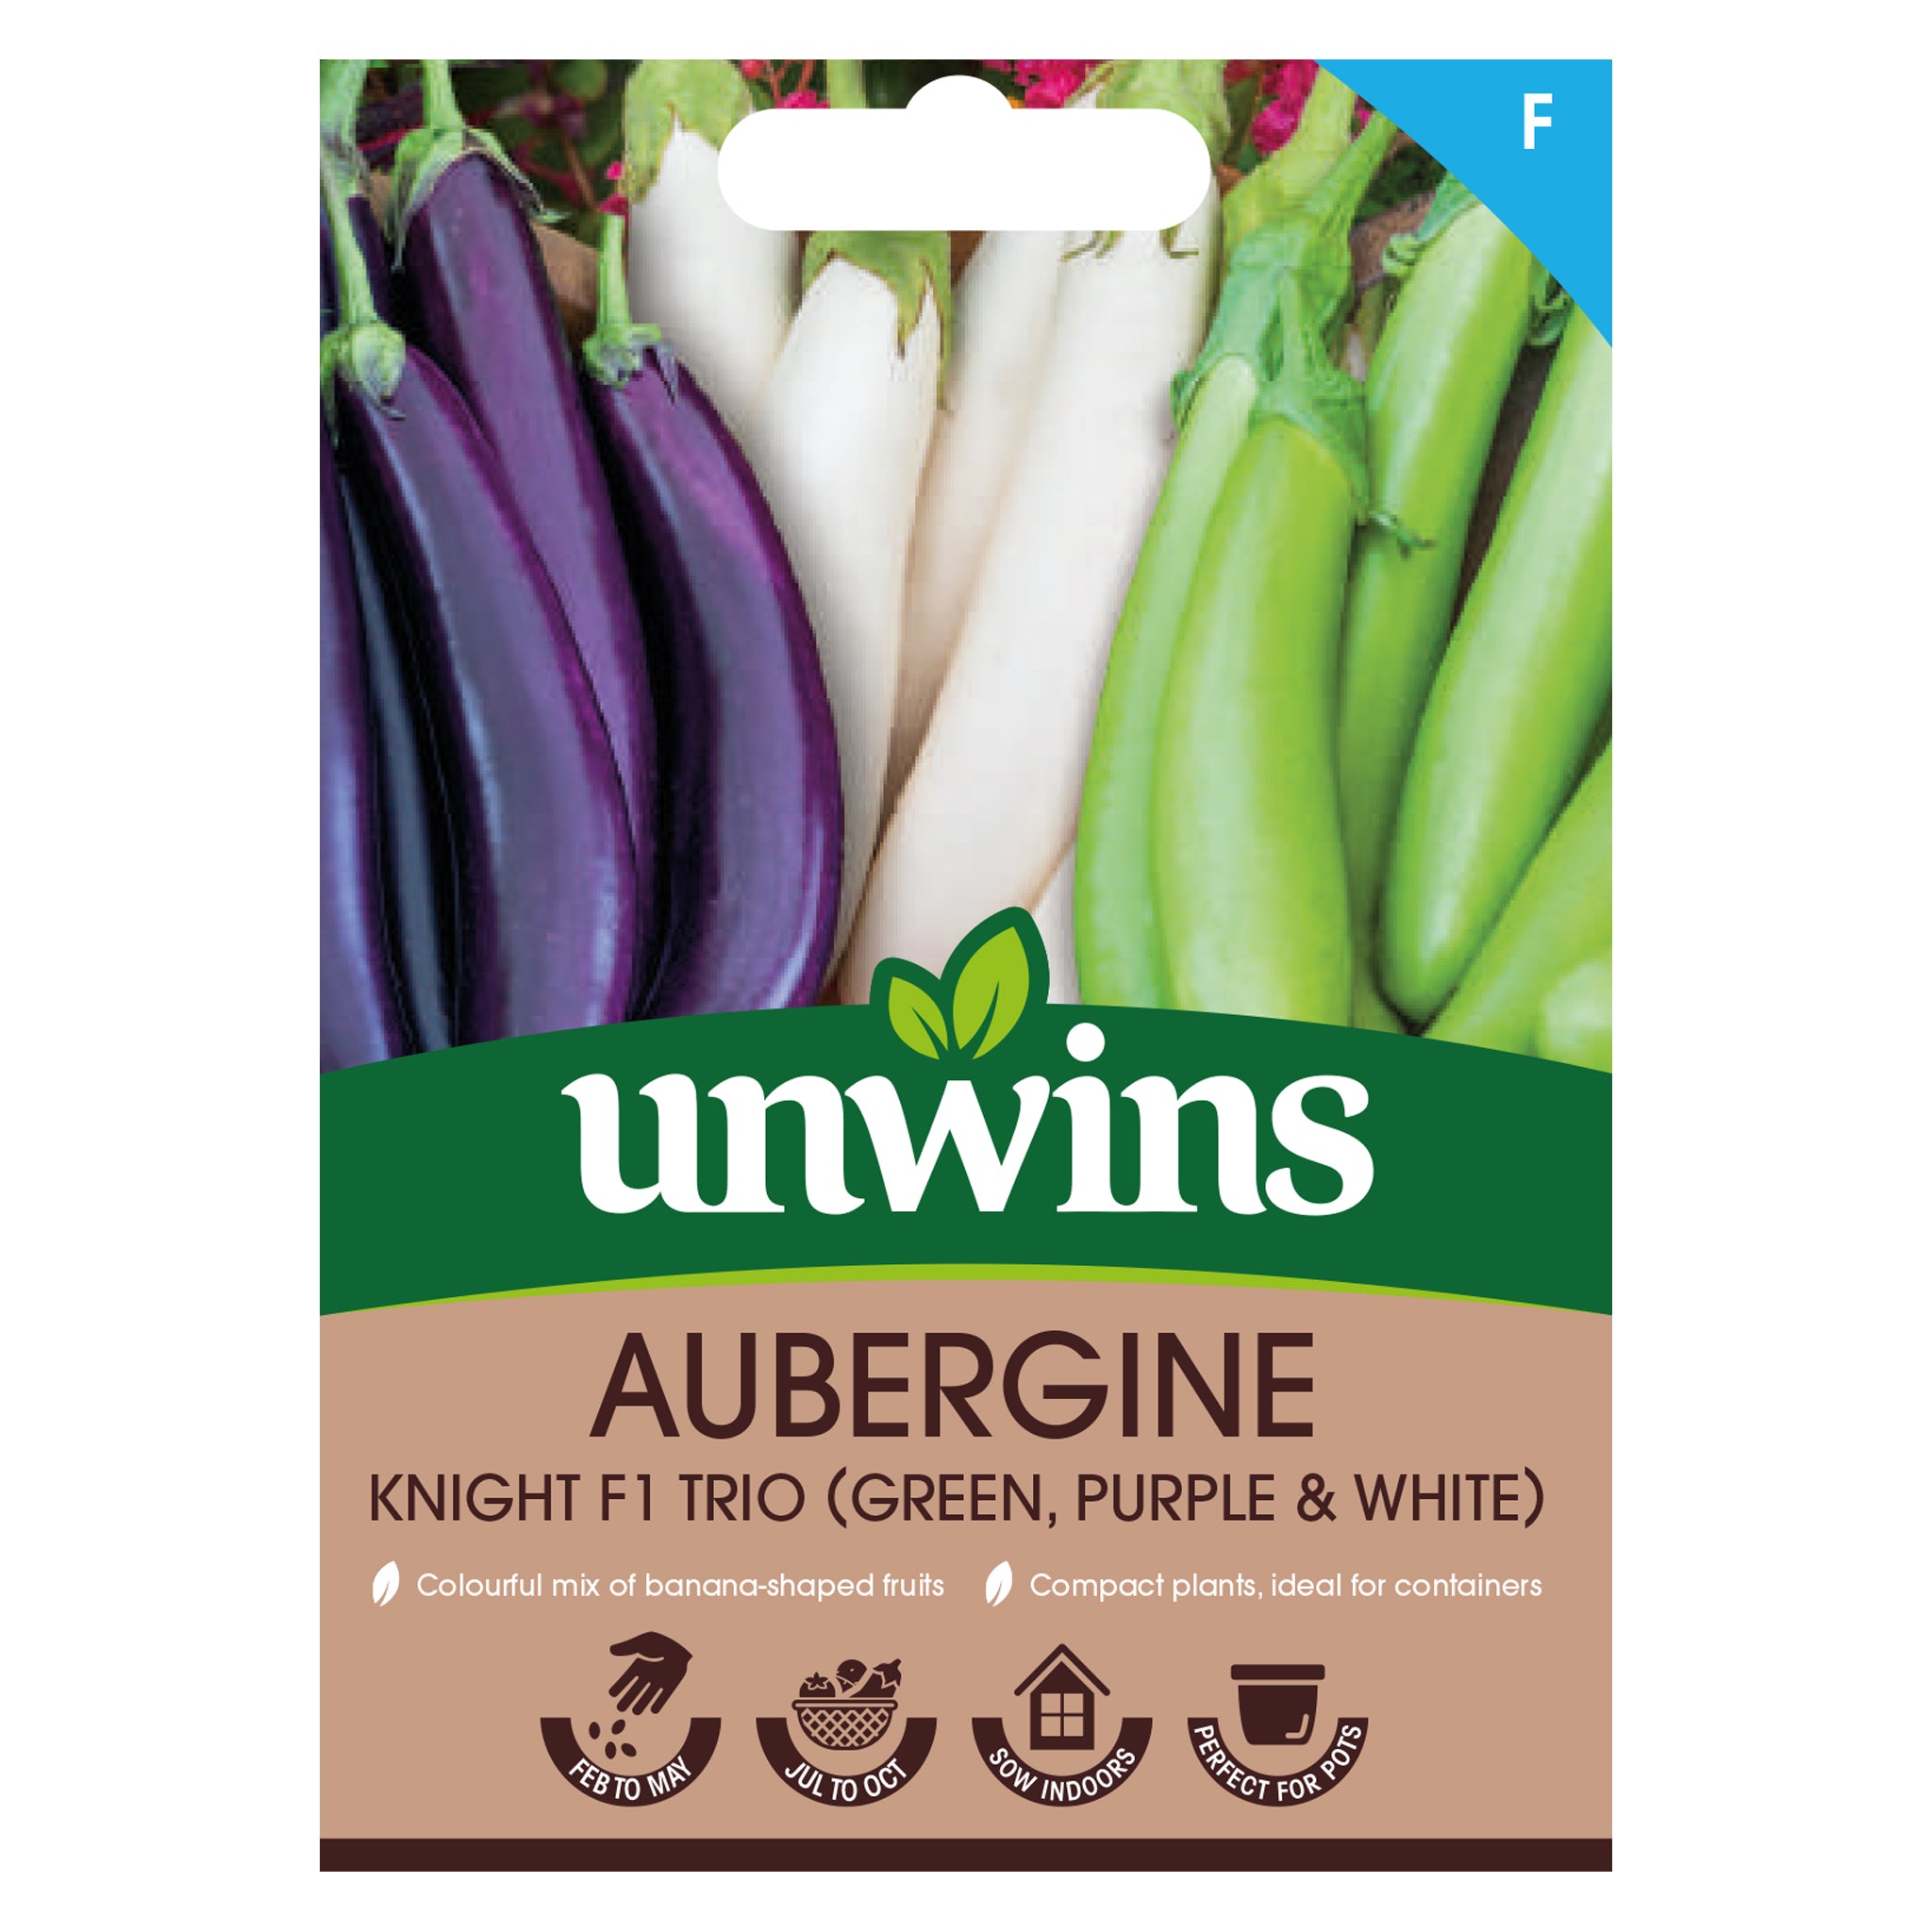 Unwins Aubergine Knight F1 Trio (Green, Purple & White) Seeds